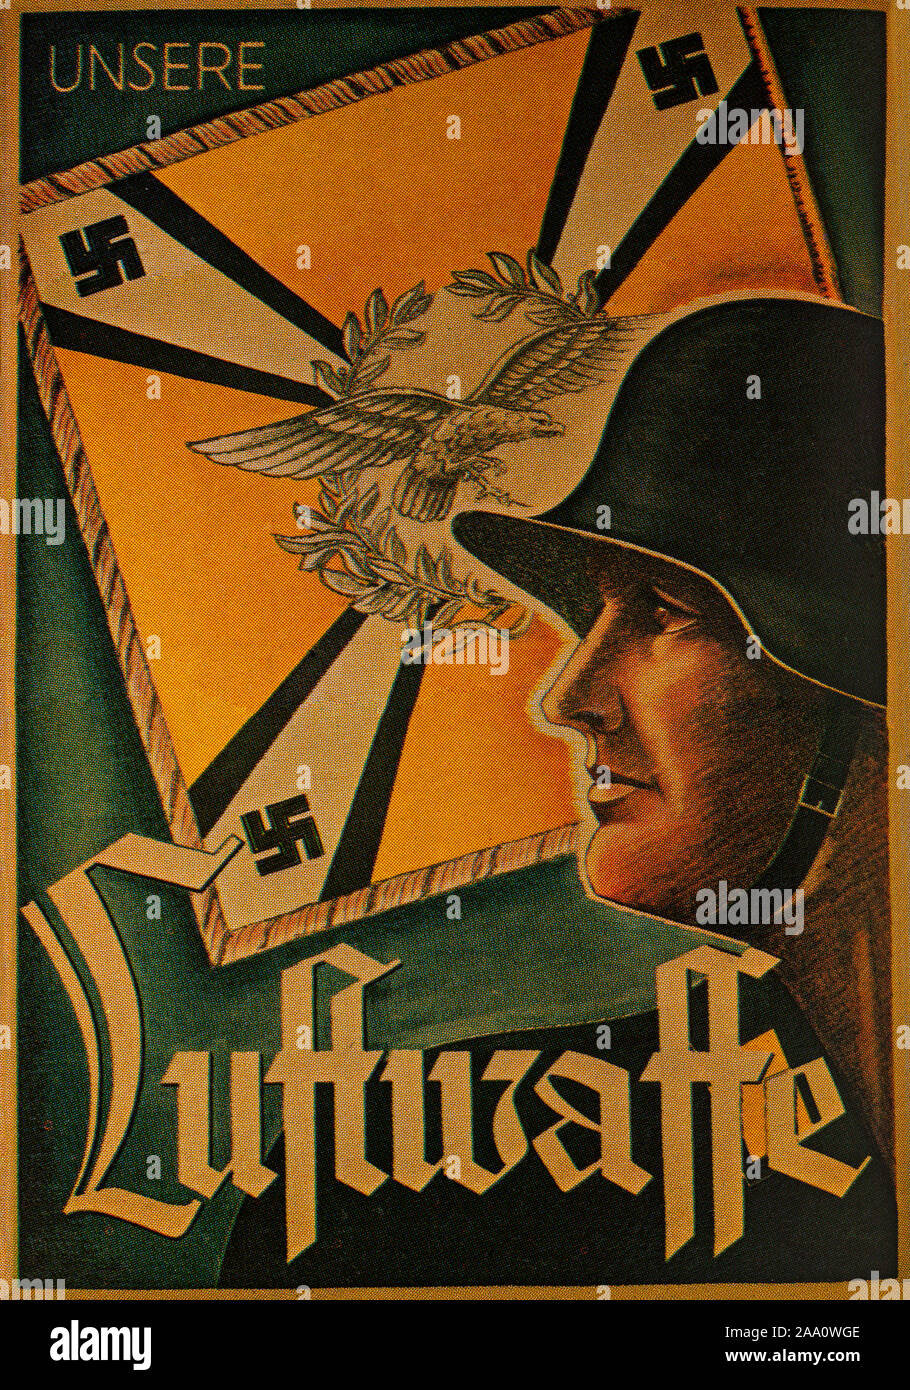 Una seconda guerra mondiale poster di reclutamento per la Luftwaffe, la guerra aerea ramo del combinato della Wehrmacht tedesca forze militari. Foto Stock